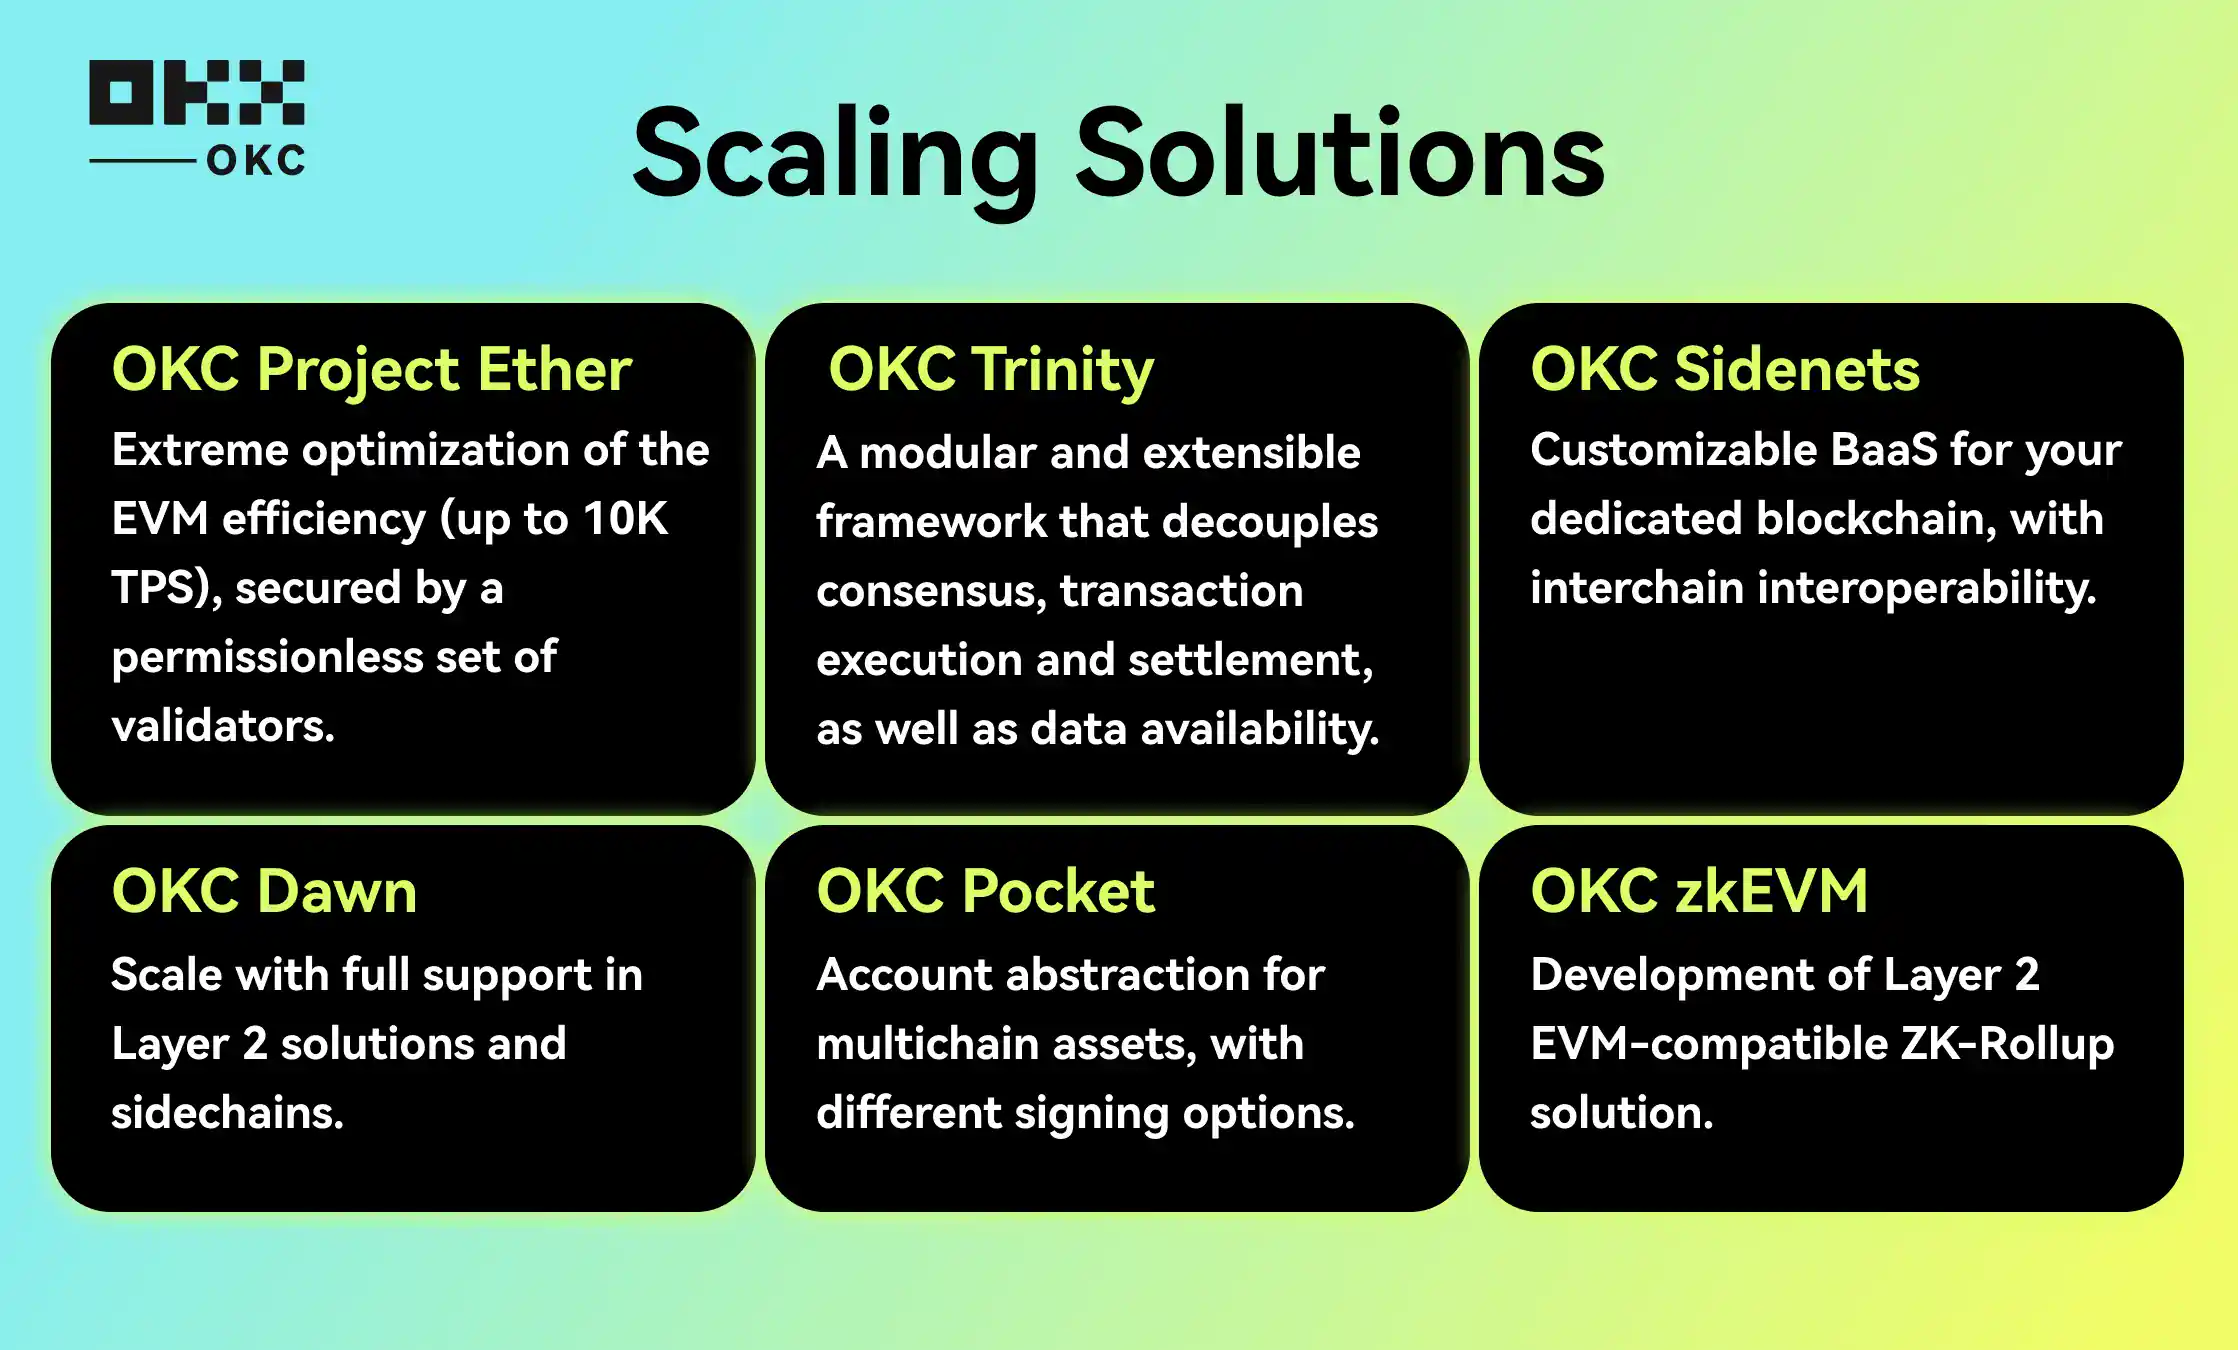 oktc scaling solutions roadmap